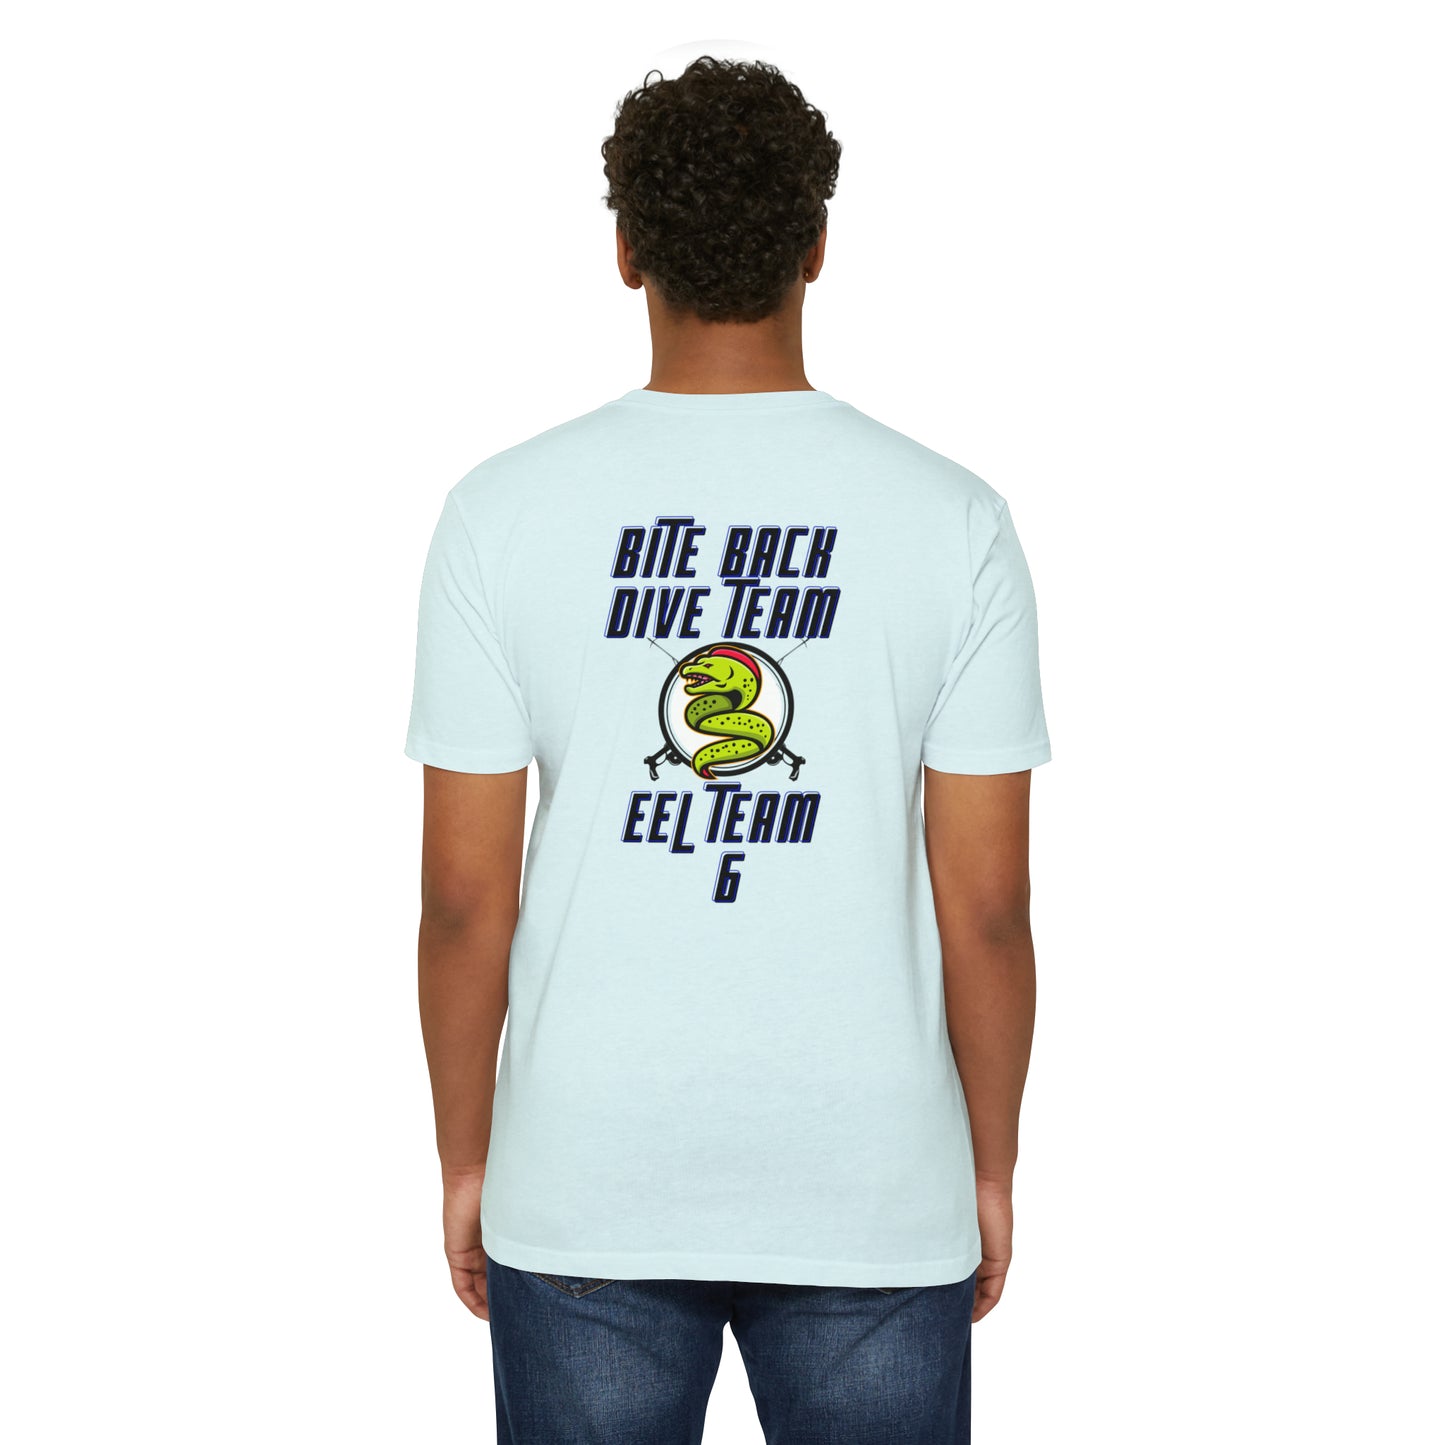 Bite Back Dive Team T-Shirt